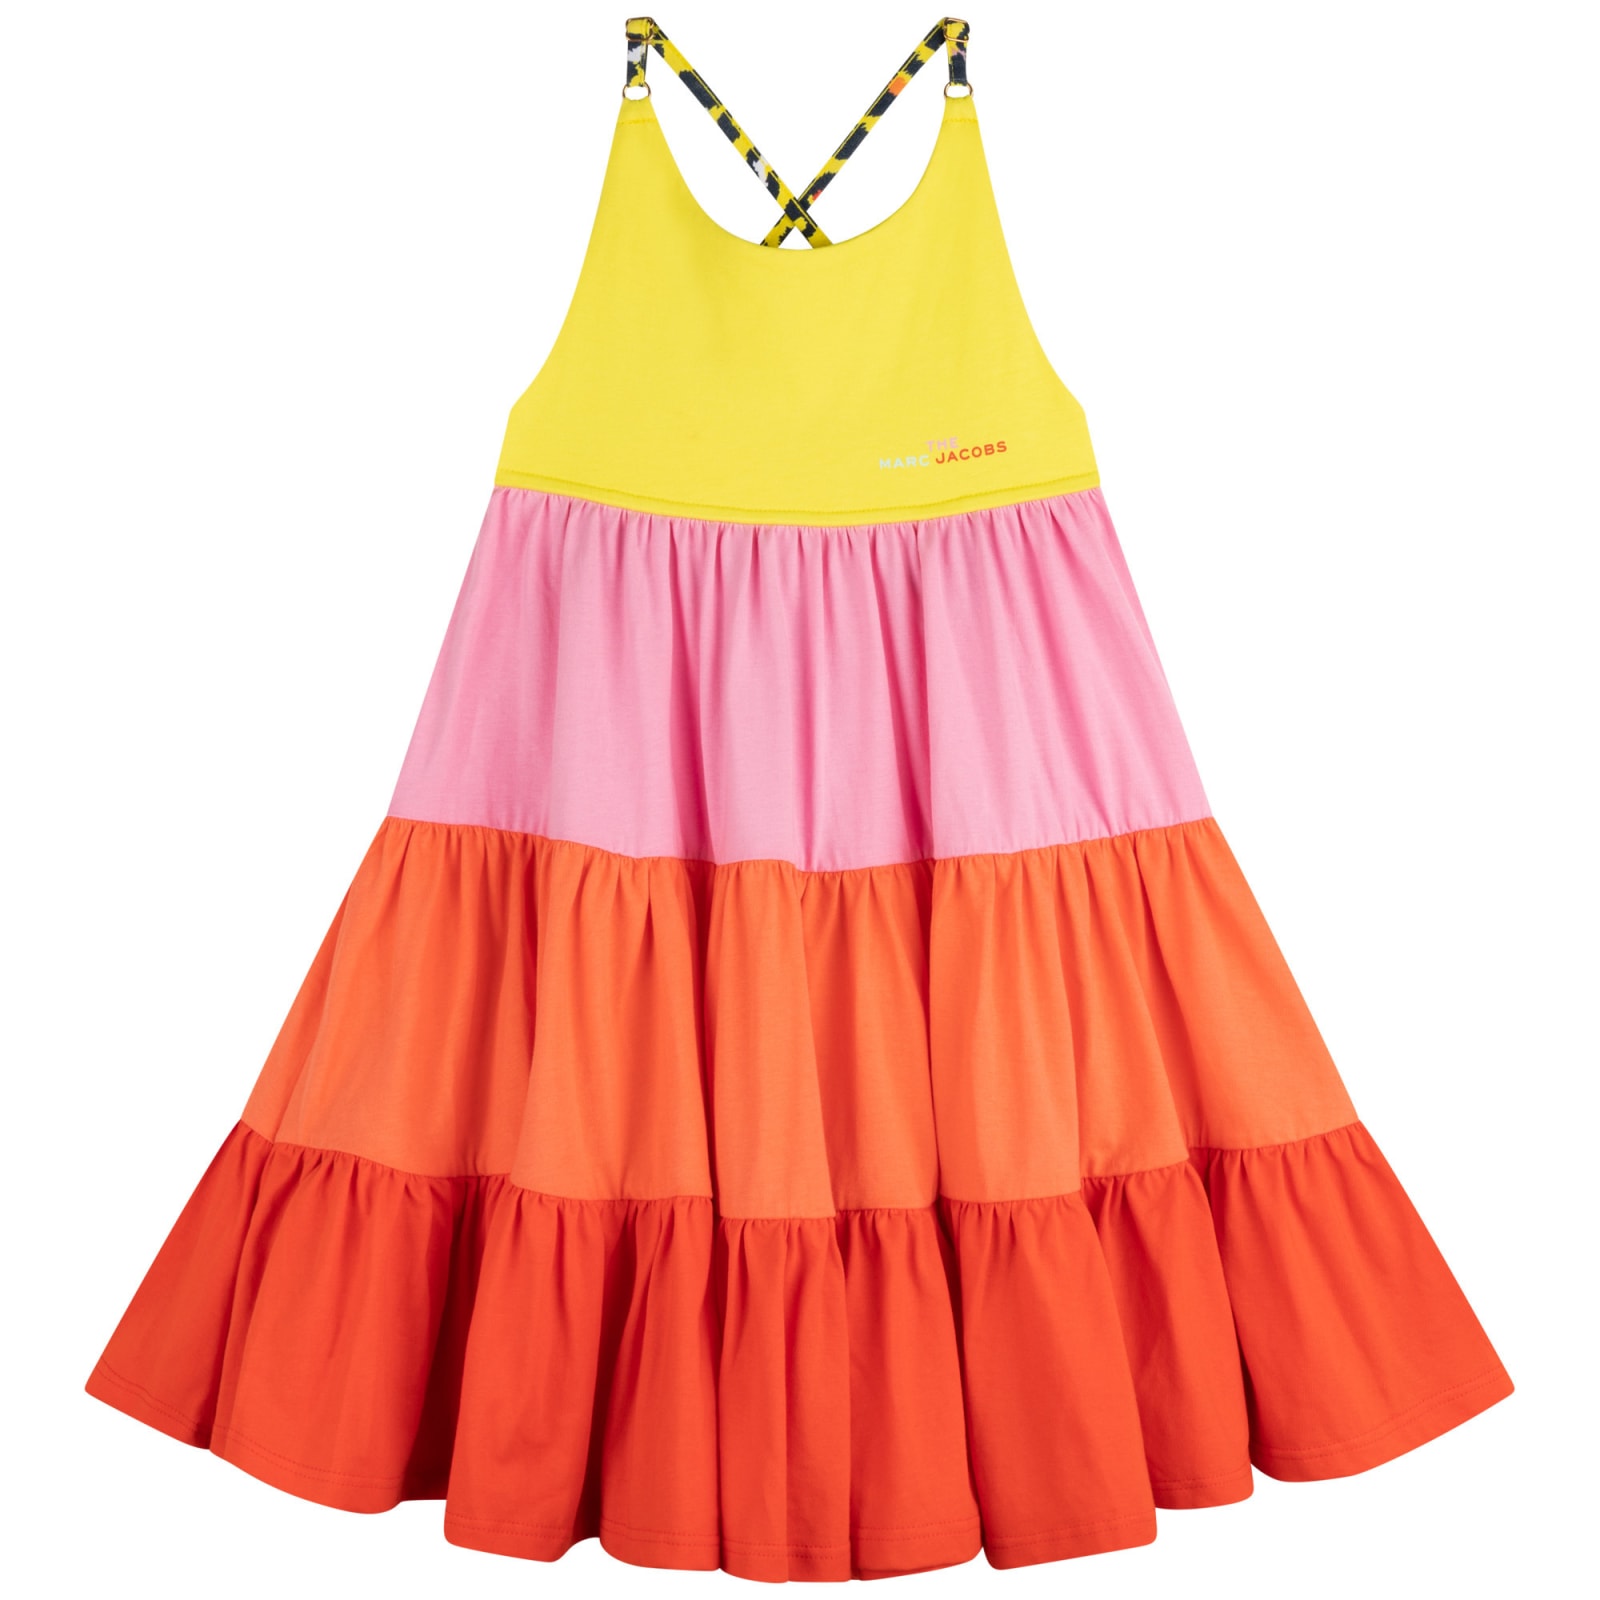 Marc Jacobs Dress With Color-block Design